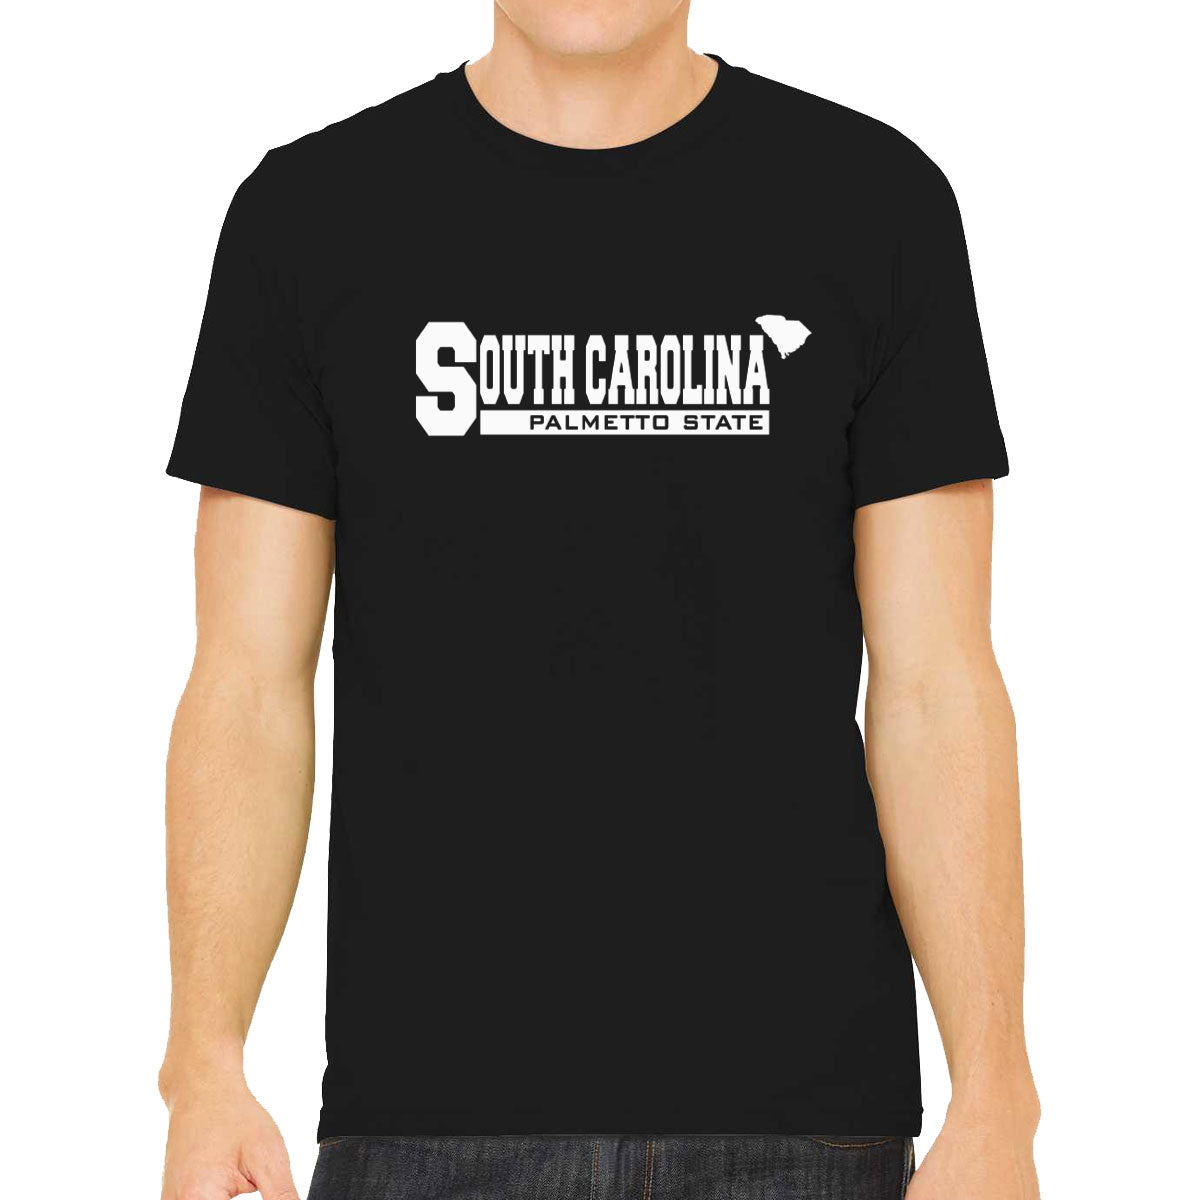 South Carolina Palmetto State Men's T-shirt